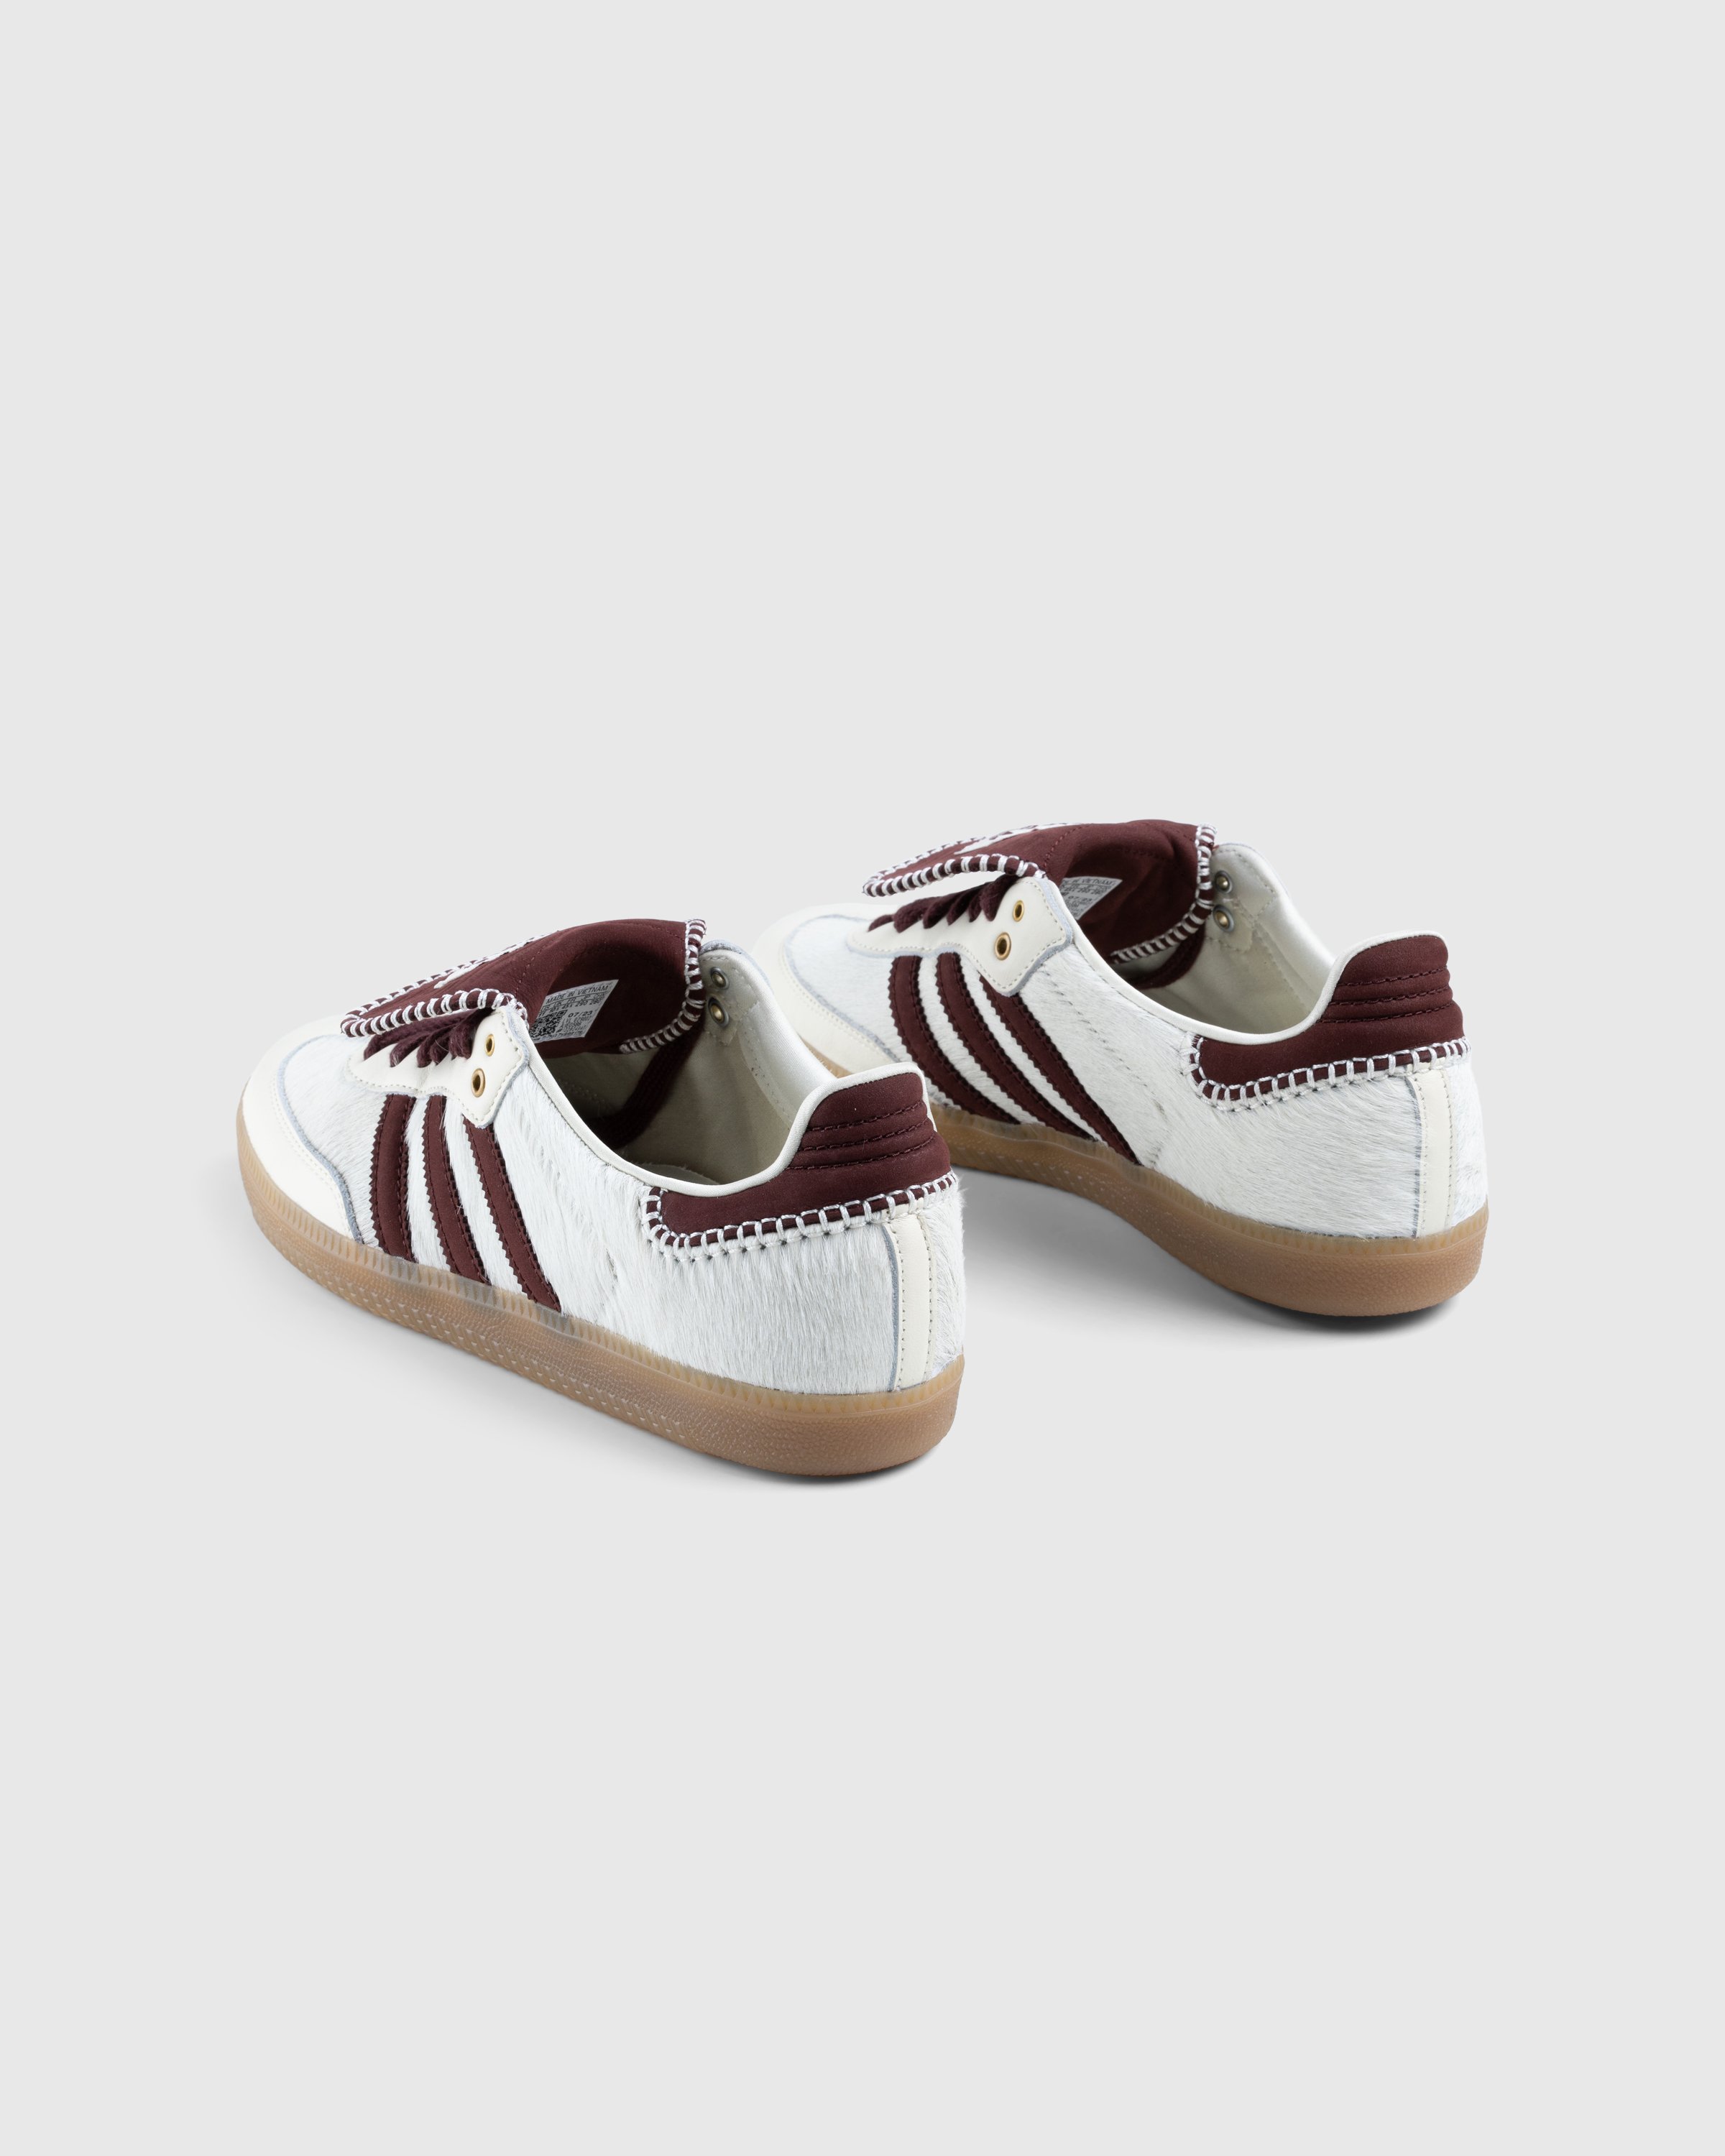 Adidas x Wales Bonner - WB PONY TONAL SAMBA CWHITE/MYSBRN/CWHITE - Footwear - White - Image 4